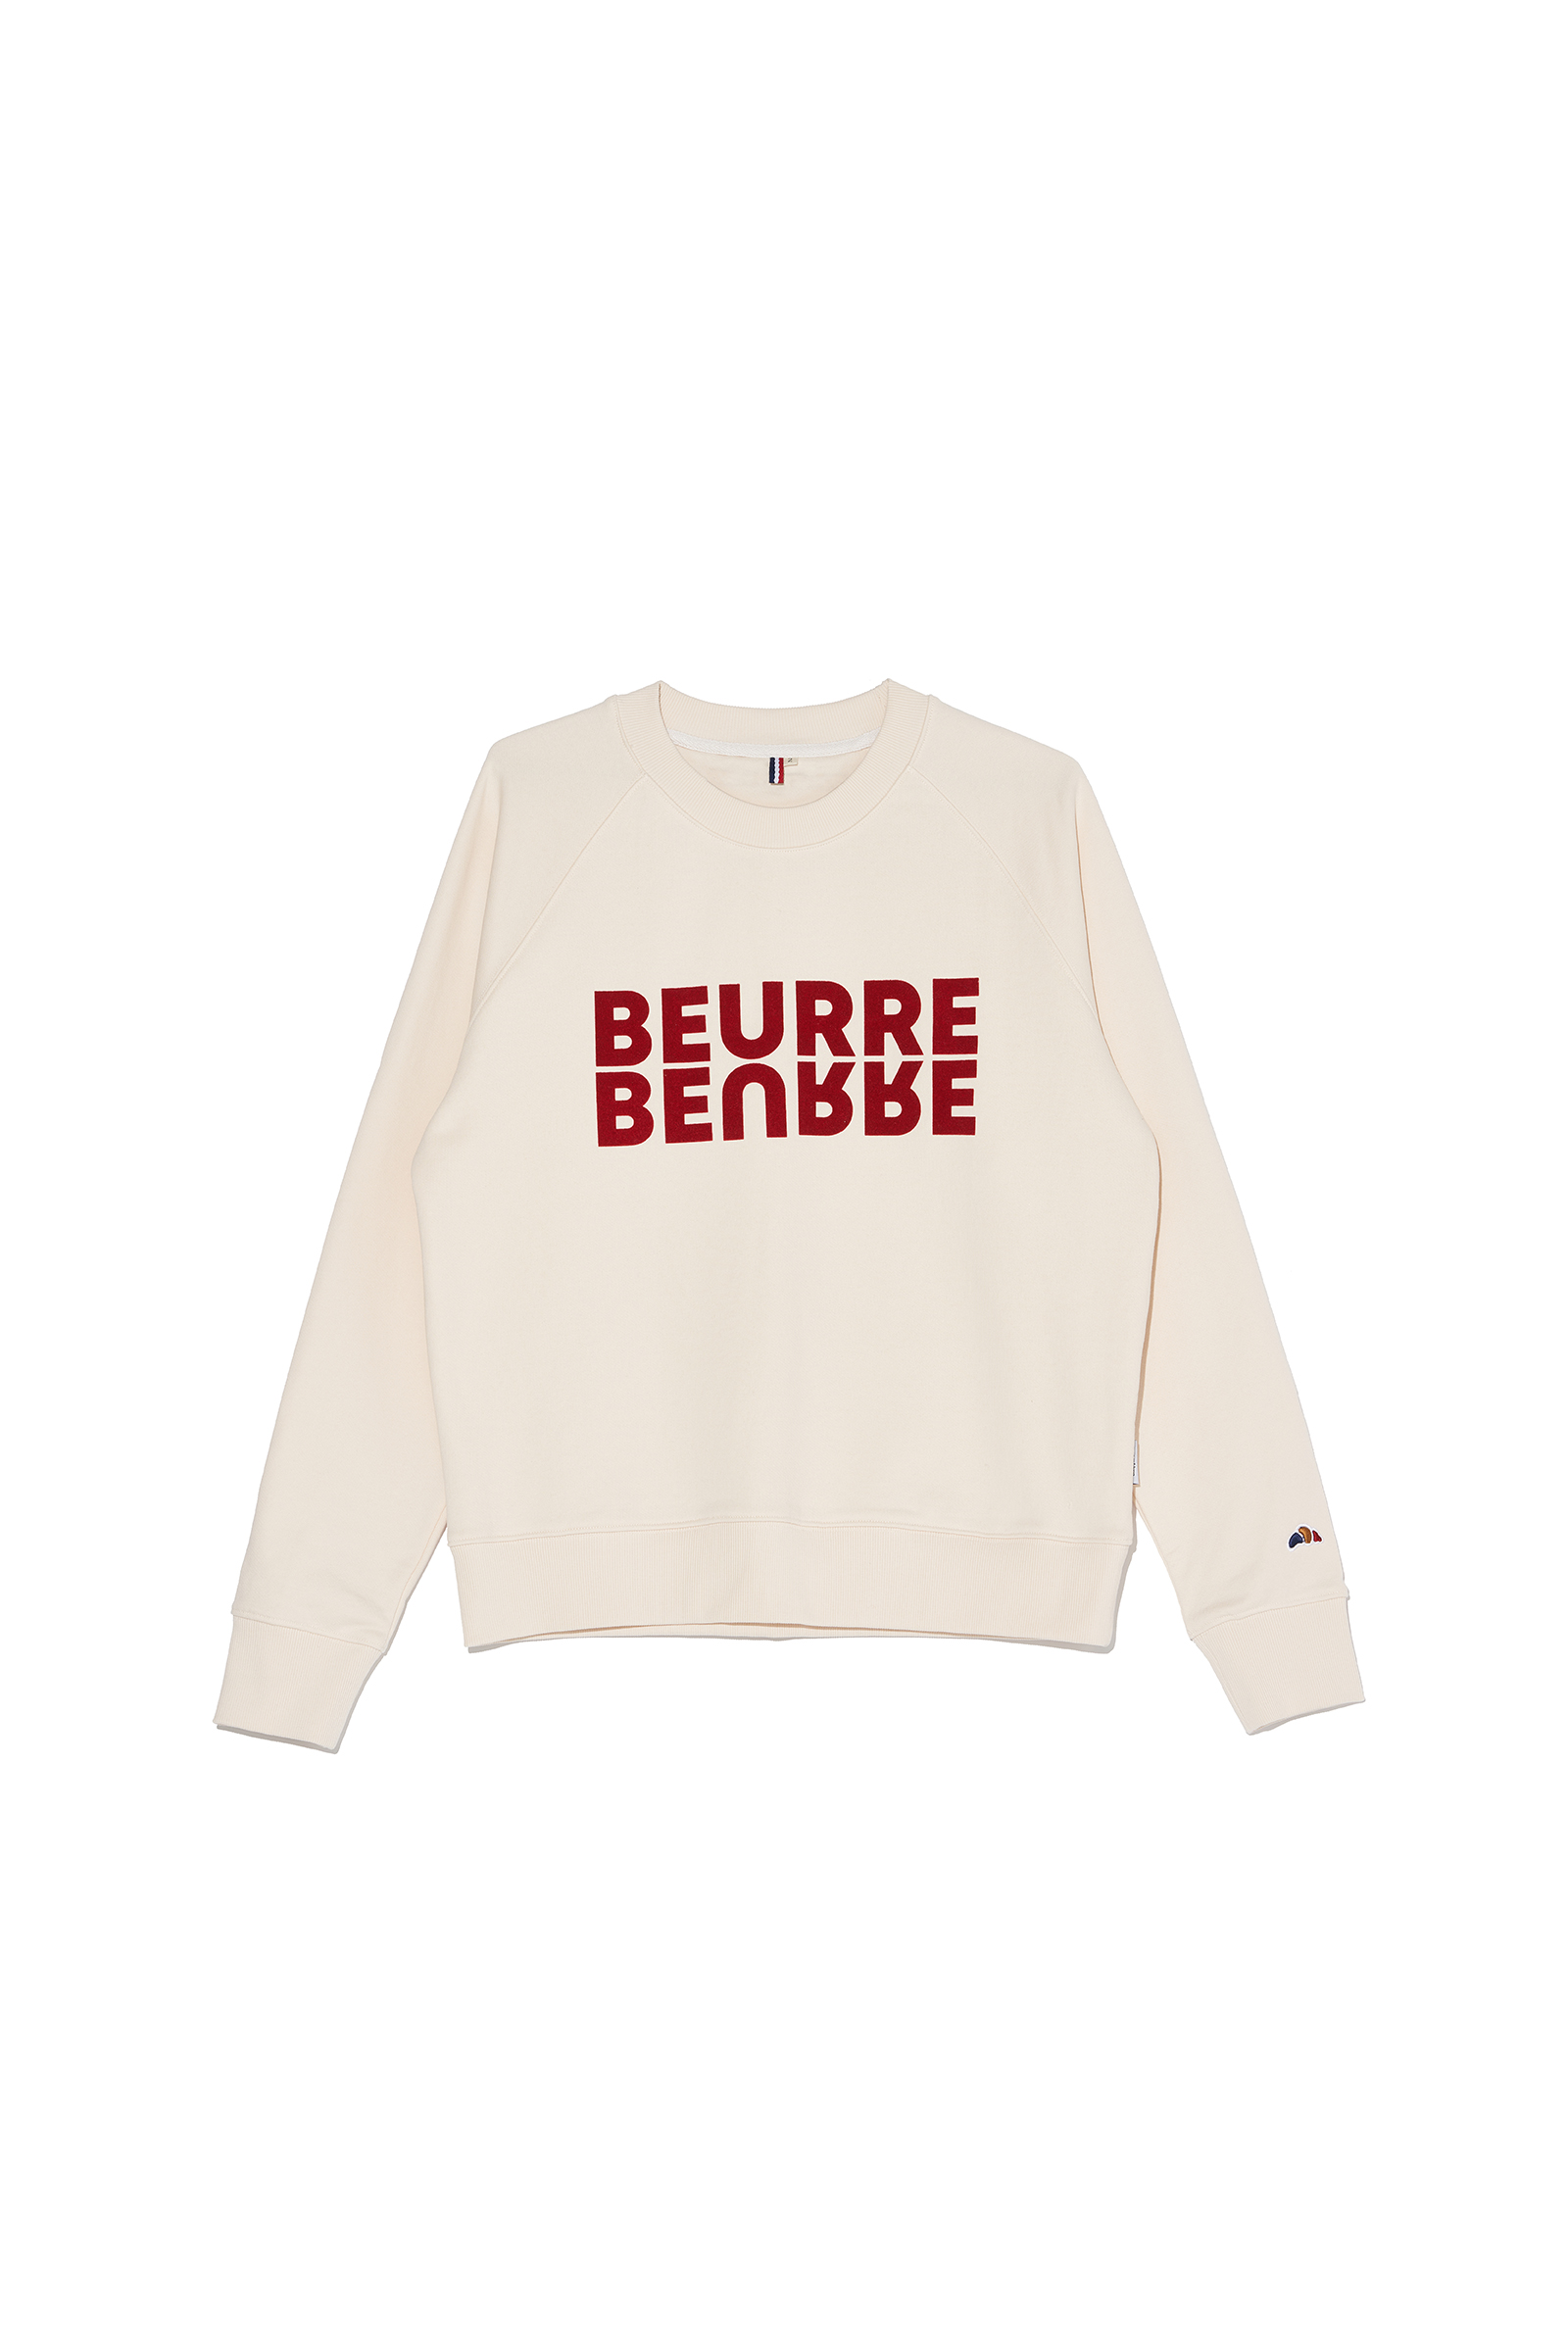 ep.6 BEURRE Decalcomanie sweatshirt (Ivory)